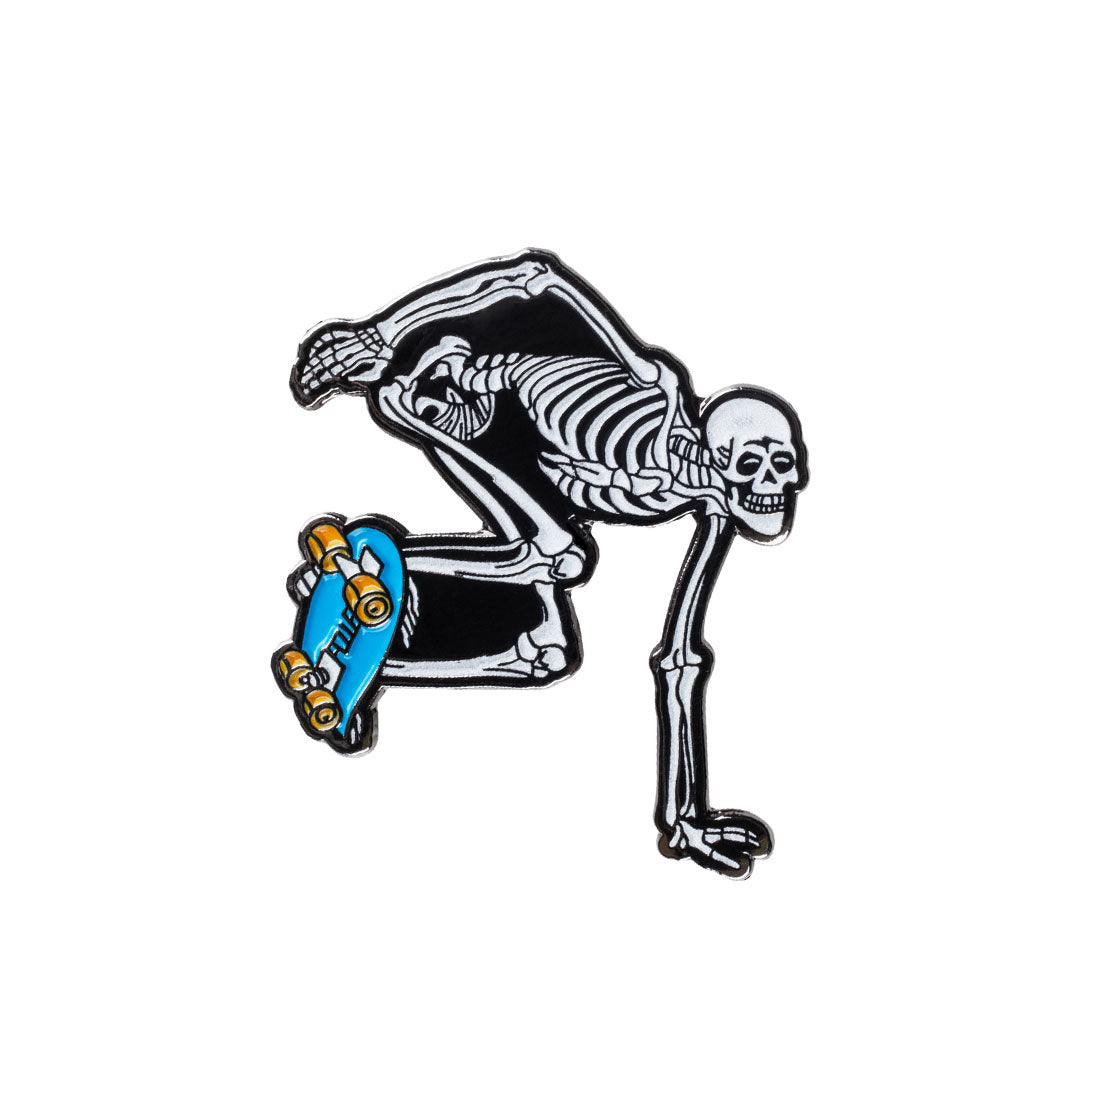 Powell Peralta Skateboarding Skeleton Lapel Pin - Glow Skateboard Accessories